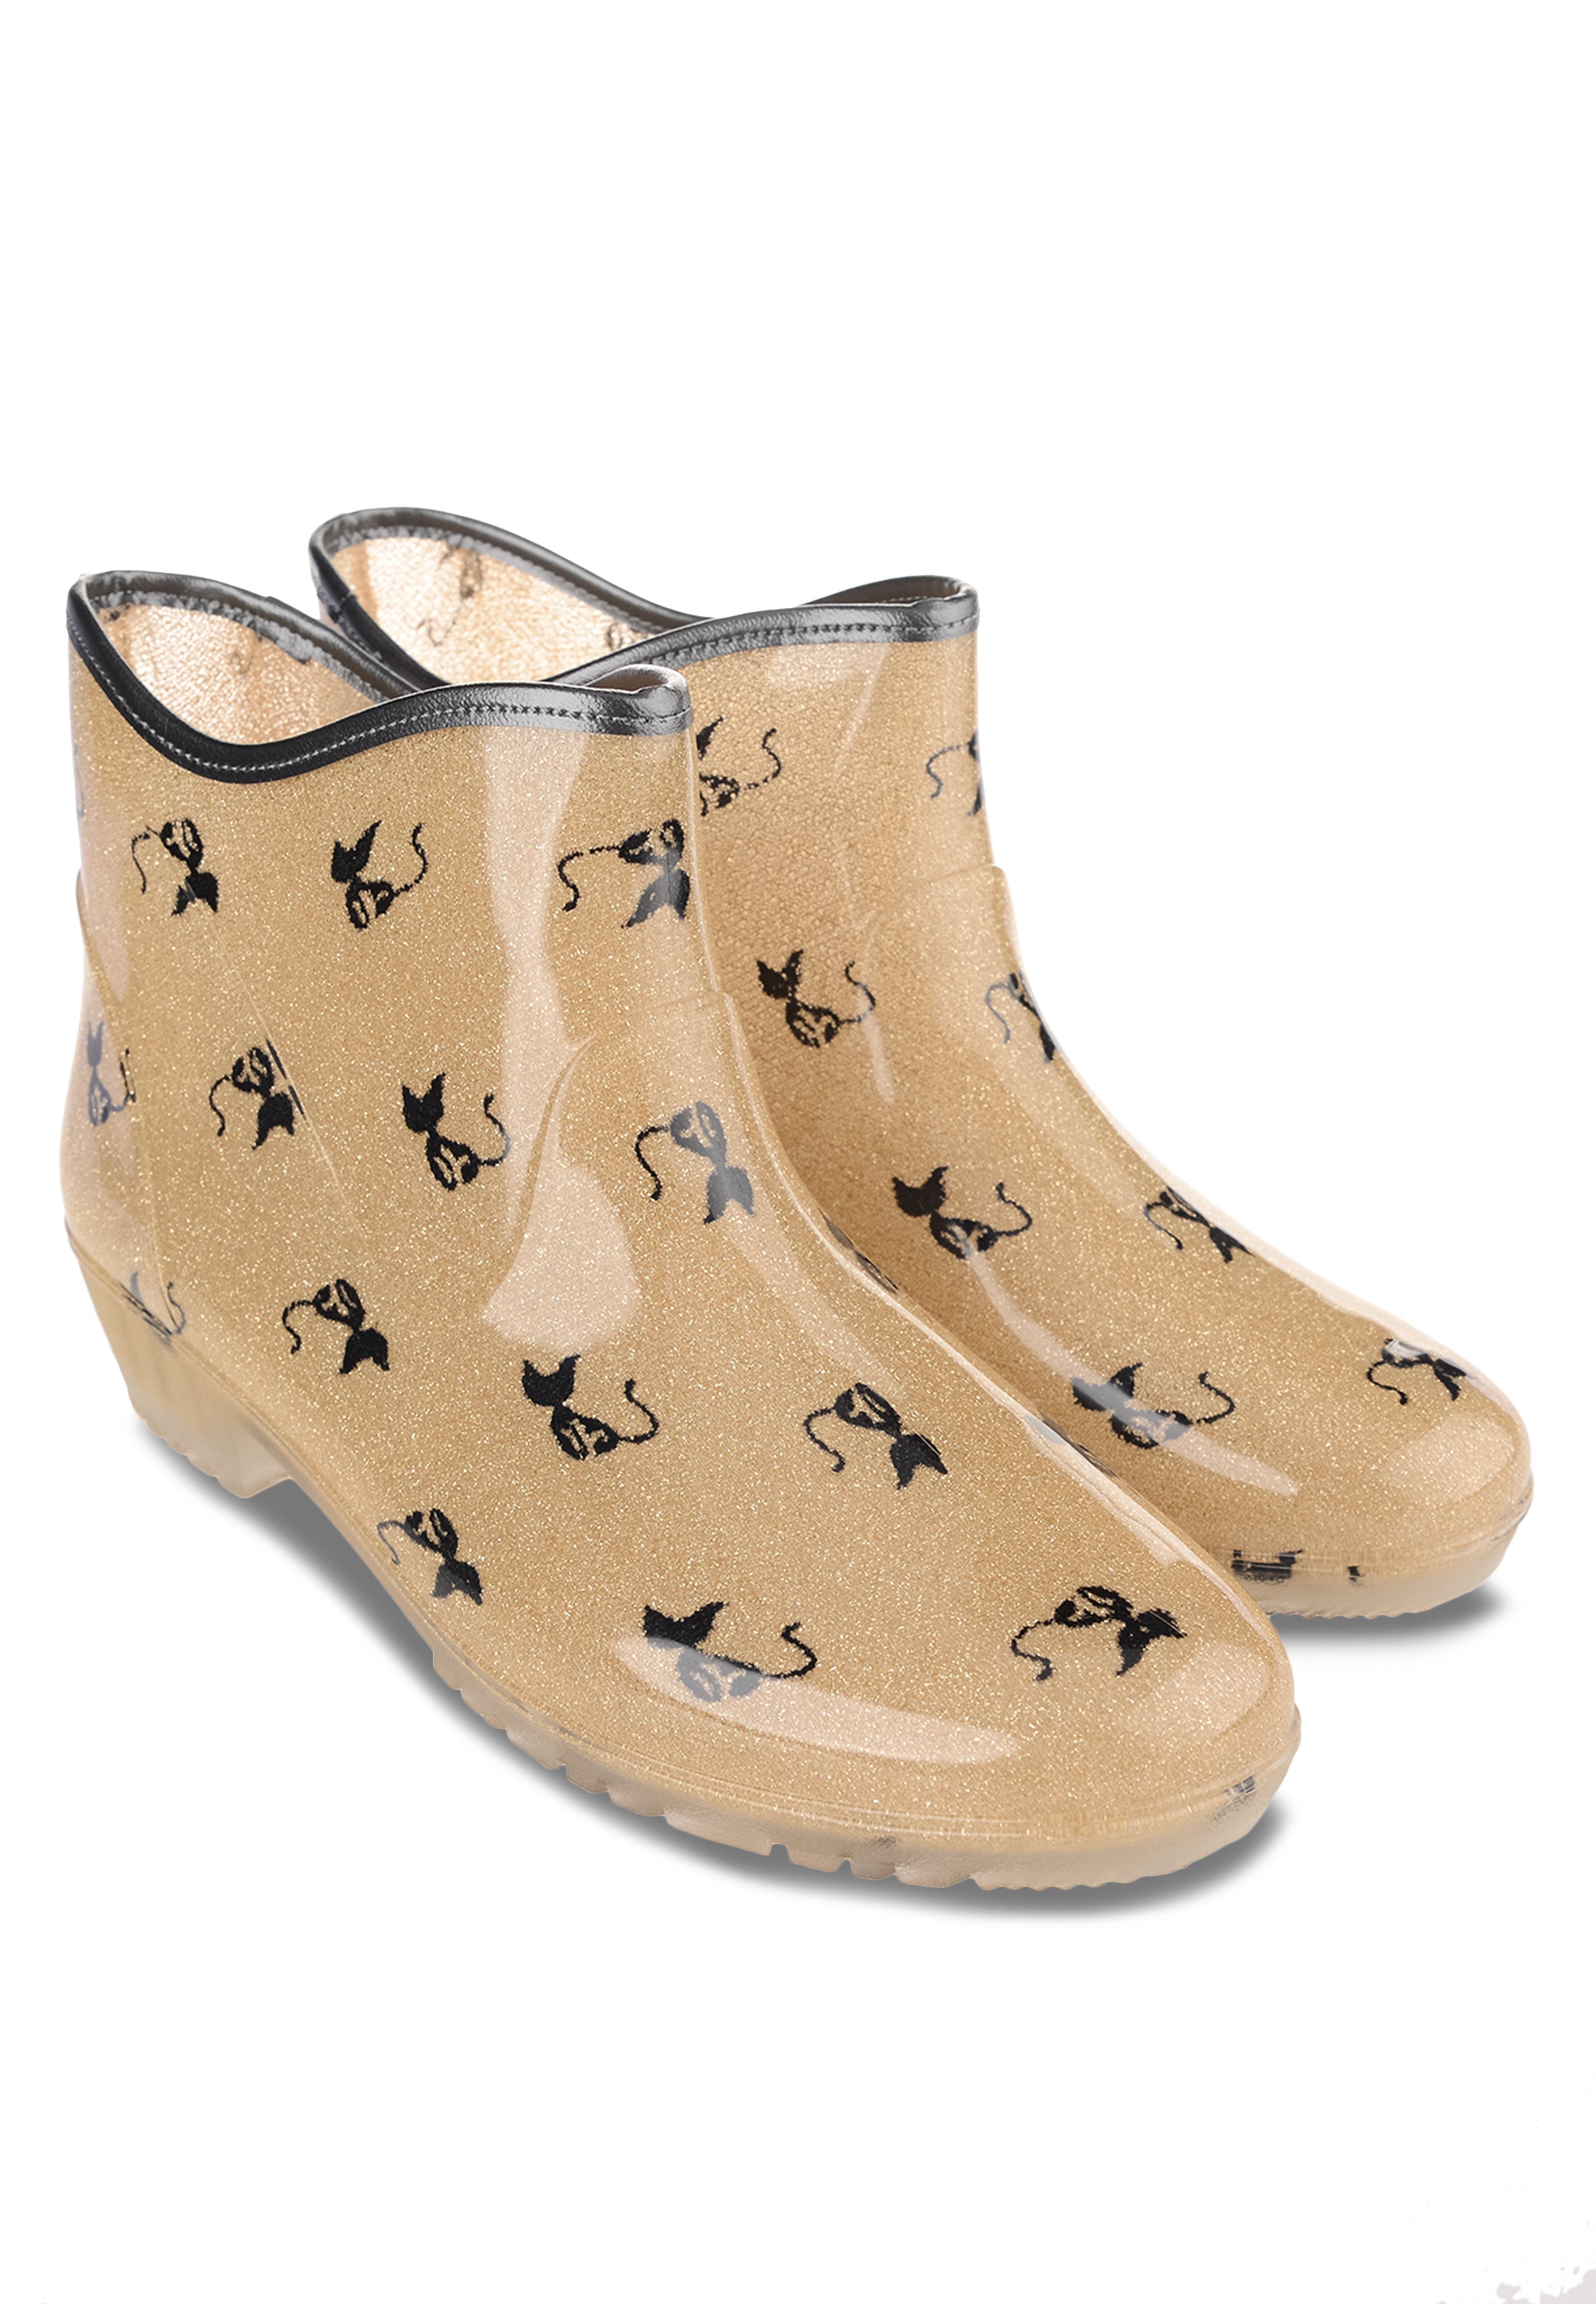 Cats Pattern Classic Lady Rain Boots with Heels-Charming-GD-JP Size-3: 36S-偉豐鞋 WELL SHOE HK-Well Shoe-偉豐鞋-偉豐網-荃灣鞋店-Functional shoes-Hong Kong Tsuen Wan Shoe Store-Tai Wan Shoe-Japan Shoe-高品質功能鞋-台灣進口鞋-日本進口鞋-High-quality shoes-鞋類配件-荃灣進口鞋-香港鞋店-優質鞋類產品-水靴-帆布鞋-廚師鞋-香港鞋品牌-Hong Kong Shoes brand-長者鞋-Hong Kong Rain Boots-Kitchen shoes-Cruthes-Slipper-Well Shoe Hong Kong-Anello-Arriba-休閒鞋-舒適鞋-健康鞋-皮鞋-Healthy shoes-Leather shoes-Hiking shoes